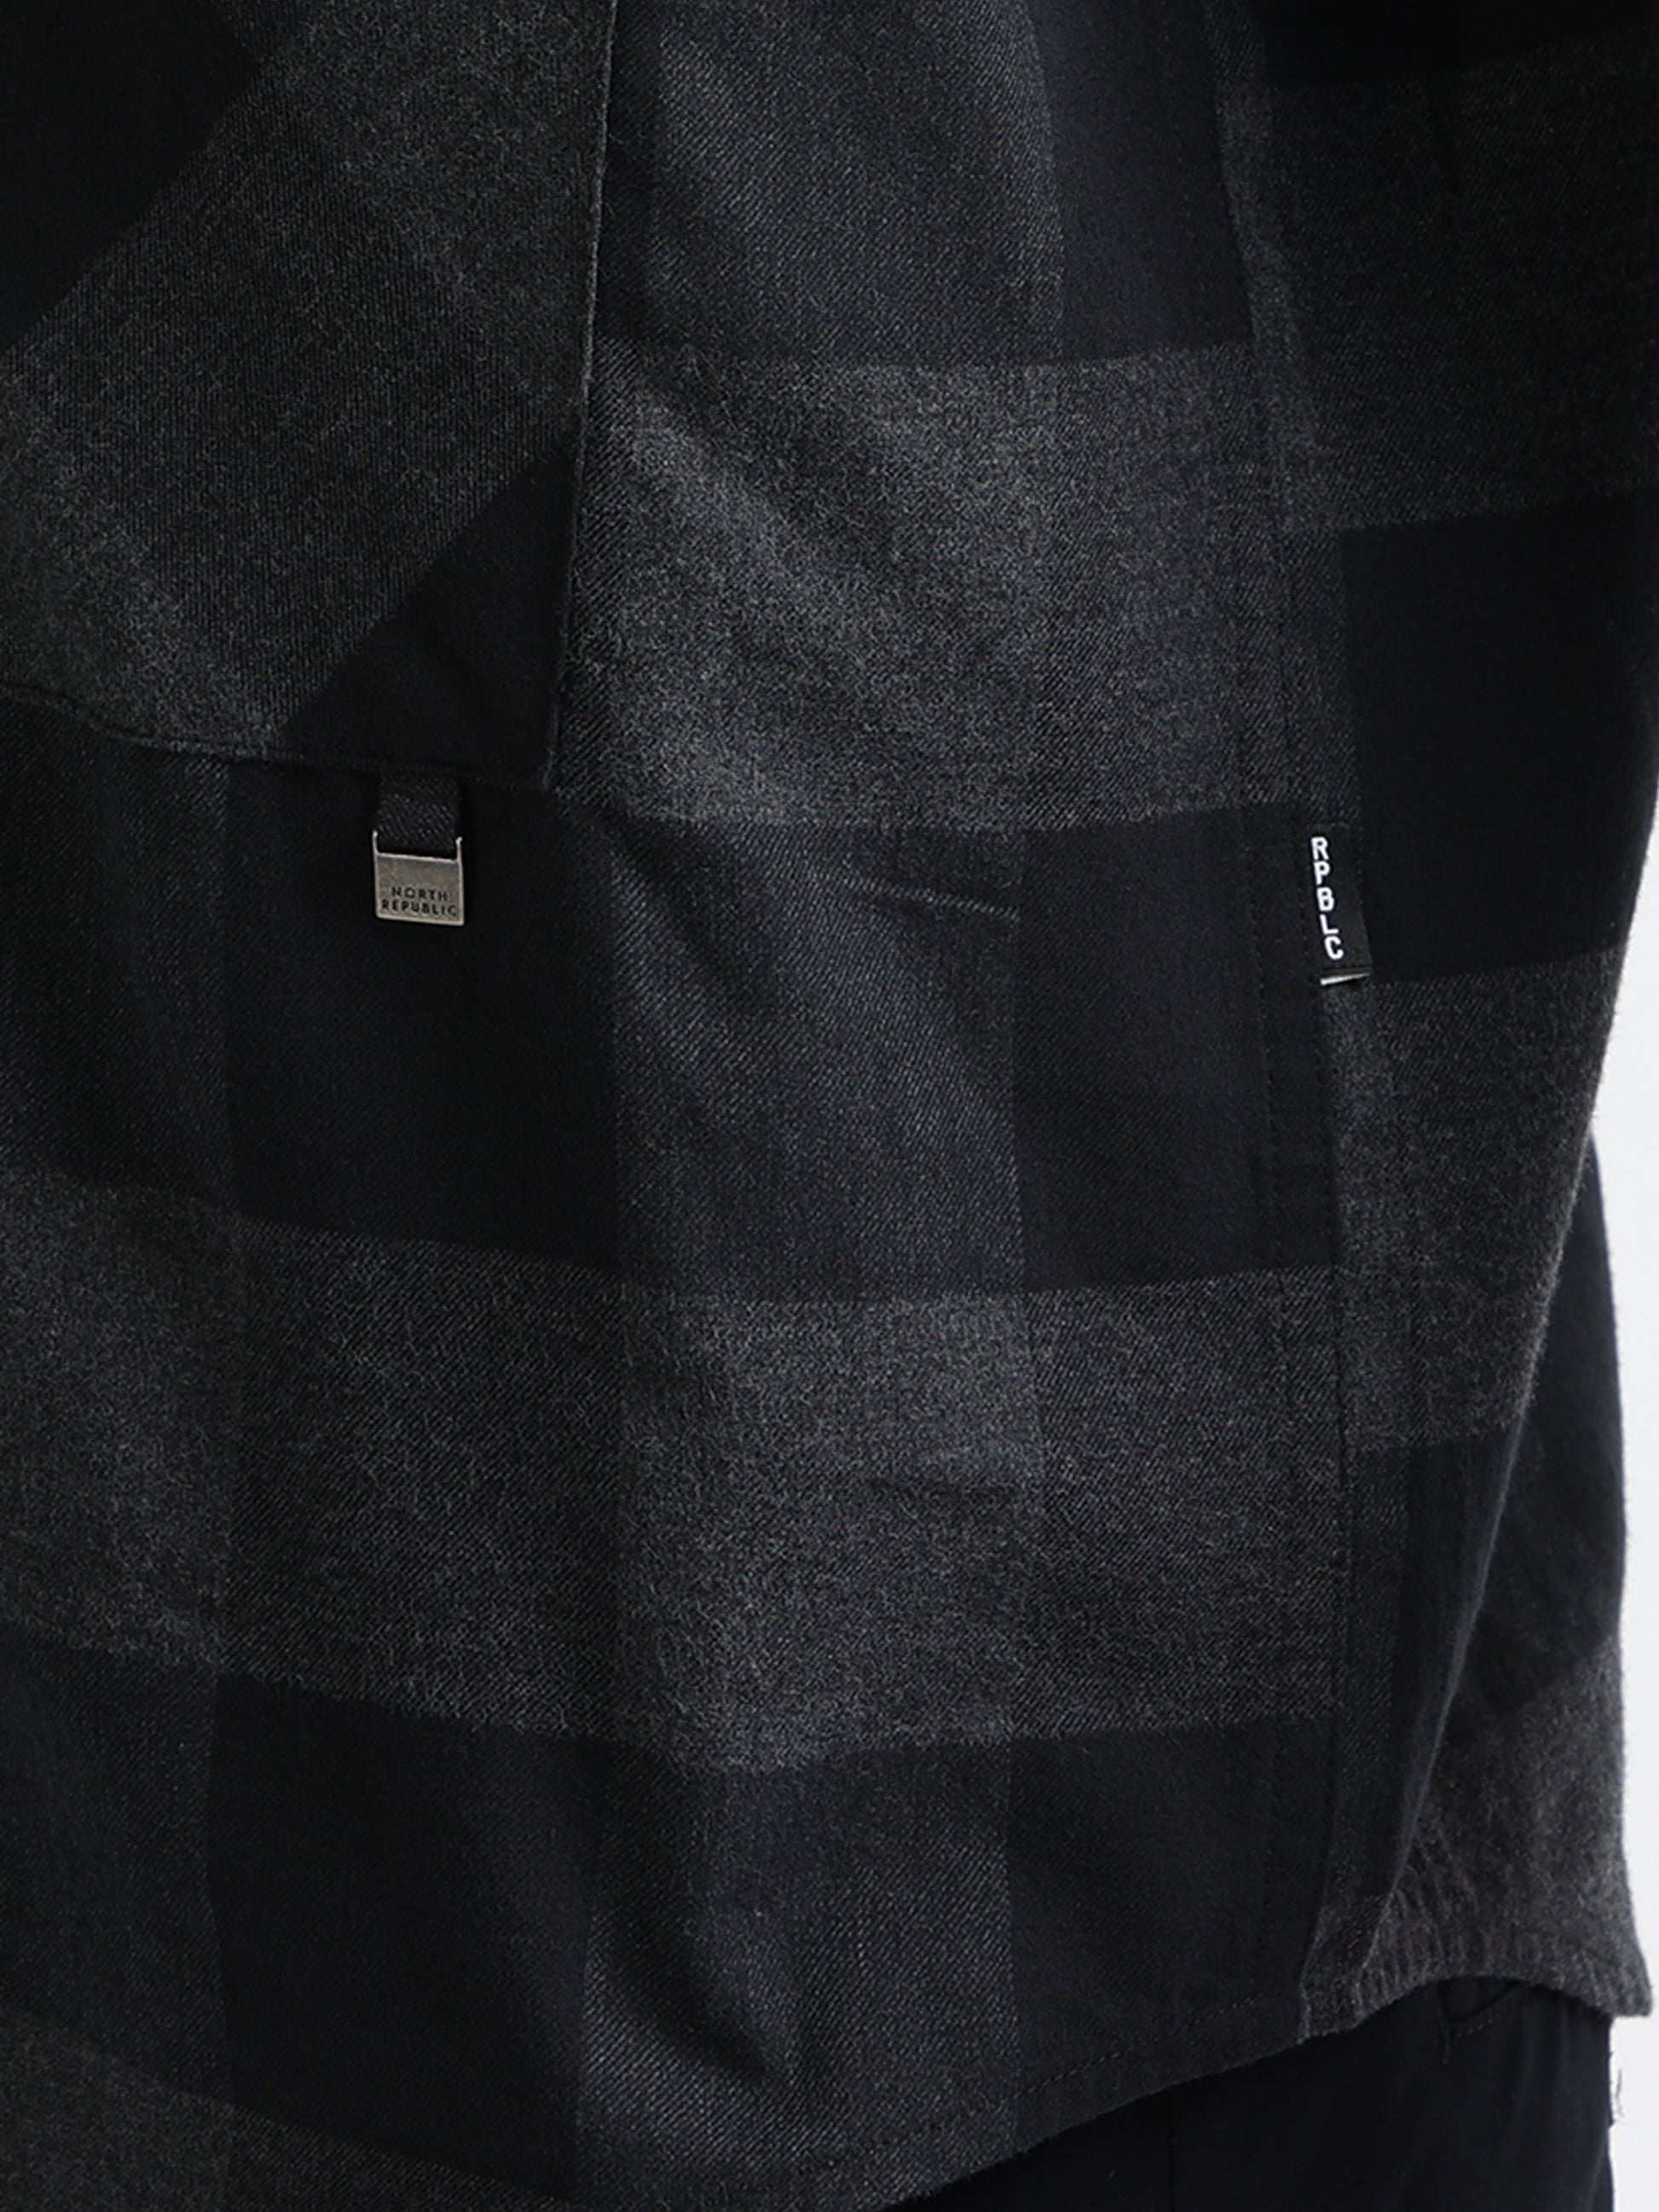 Buy Raglan Full Sleeves Kurta Style Shirt Online.